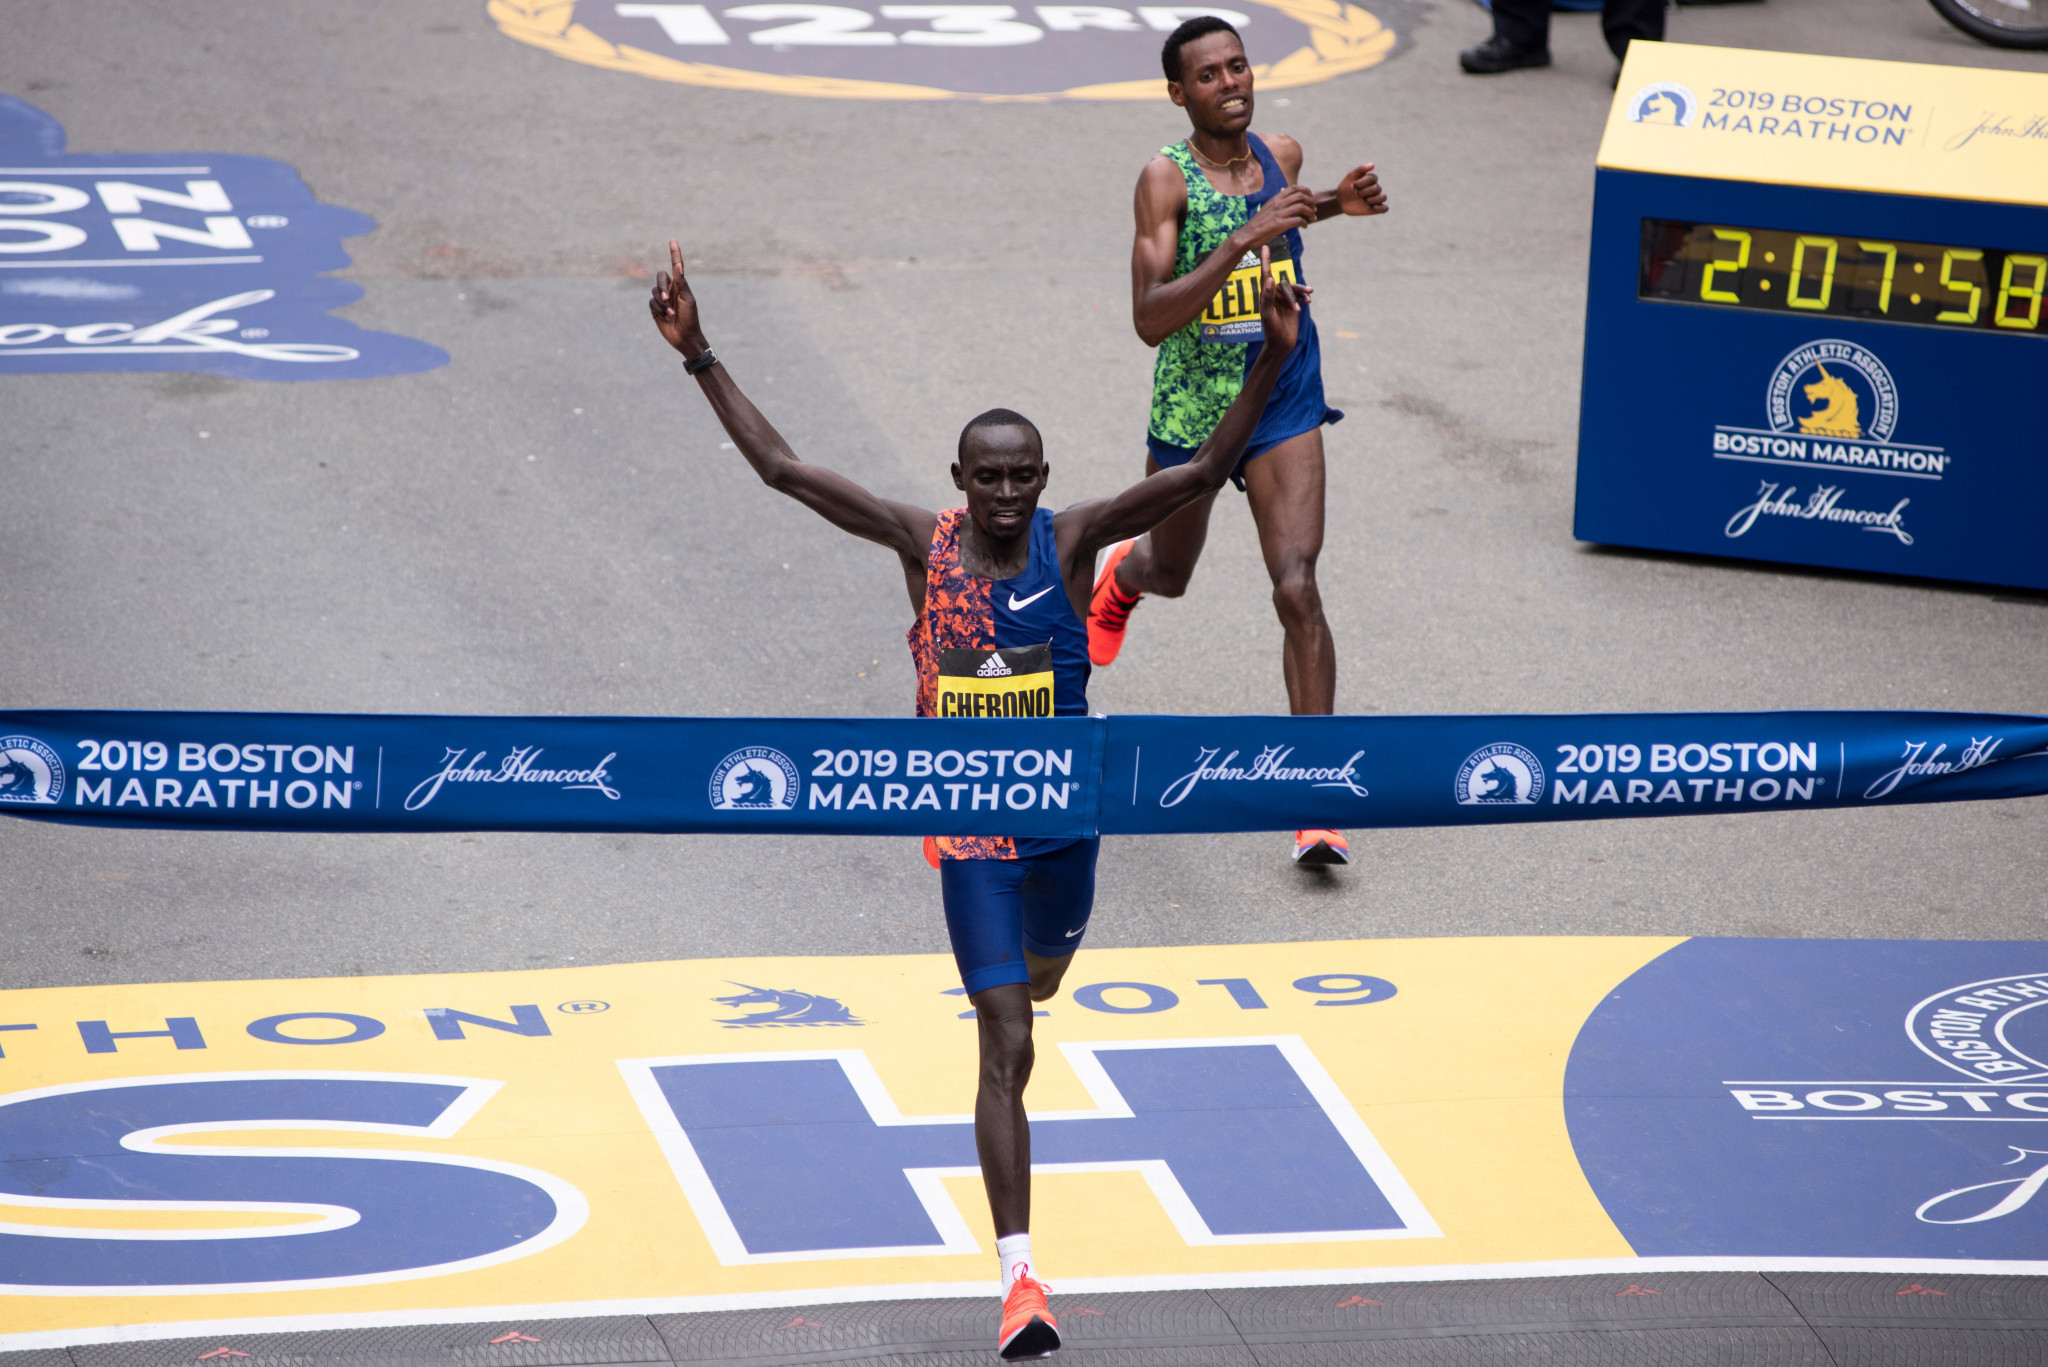 Cherono and Degefa earn first Boston Marathon titles in dramatically different fashion